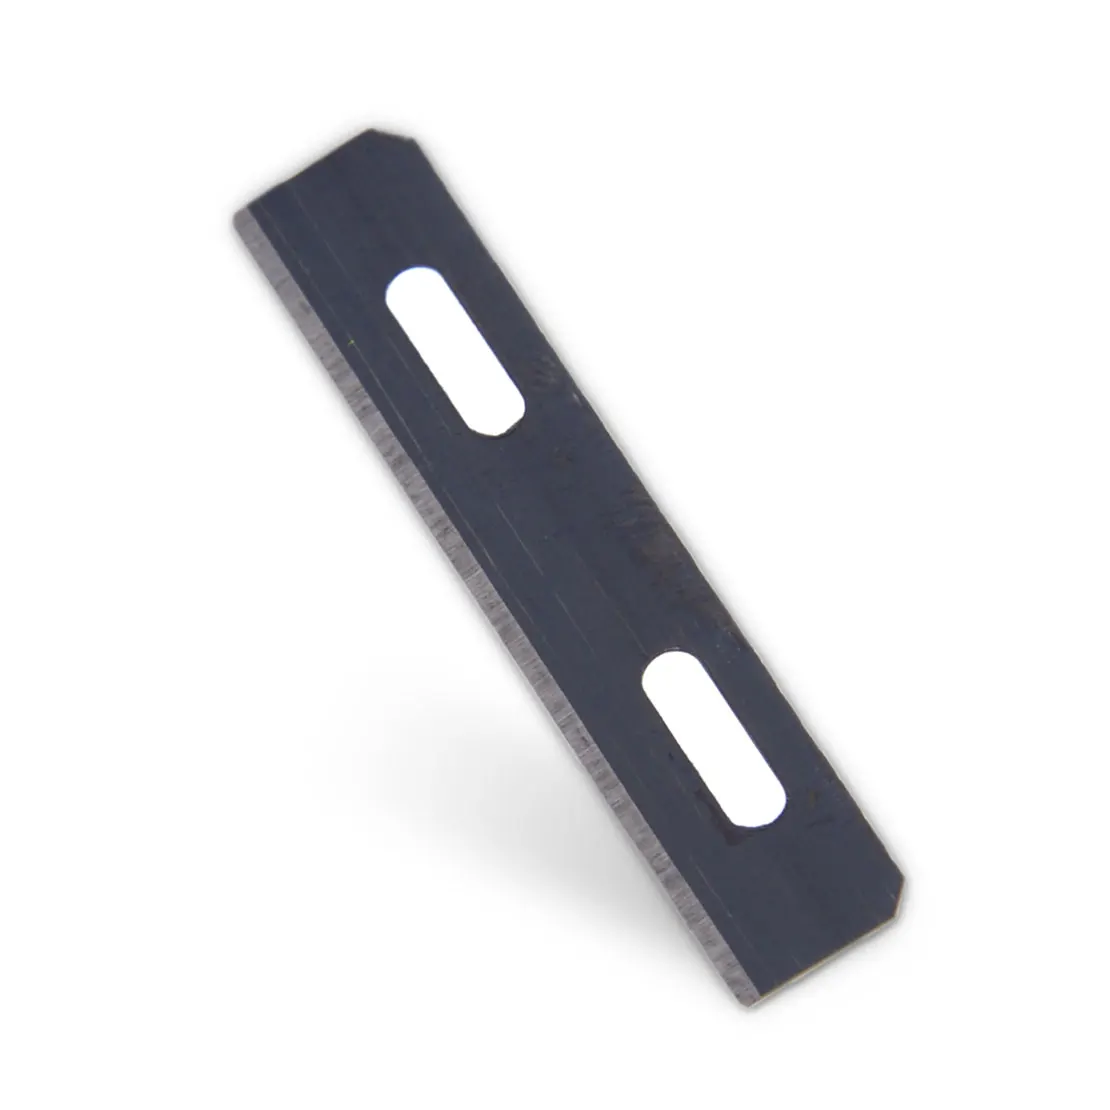 LETAOSK 블랙 10pcs 스테인리스 보충을 위해 톱날을 Skiver 안전 Strander 레이스 메이커 도구는 가죽 기술